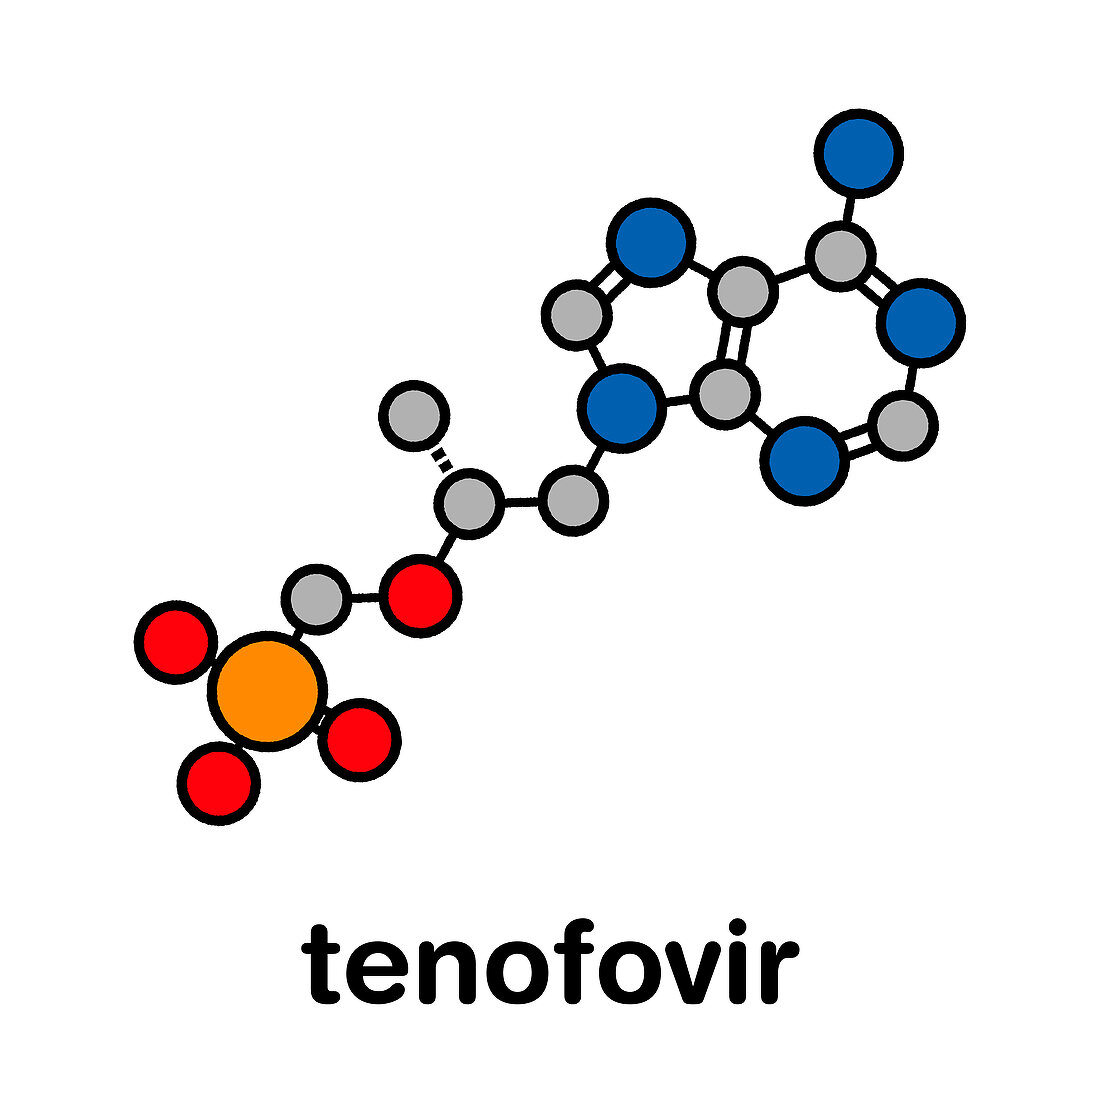 Tenofovir HIV drug, molecular model